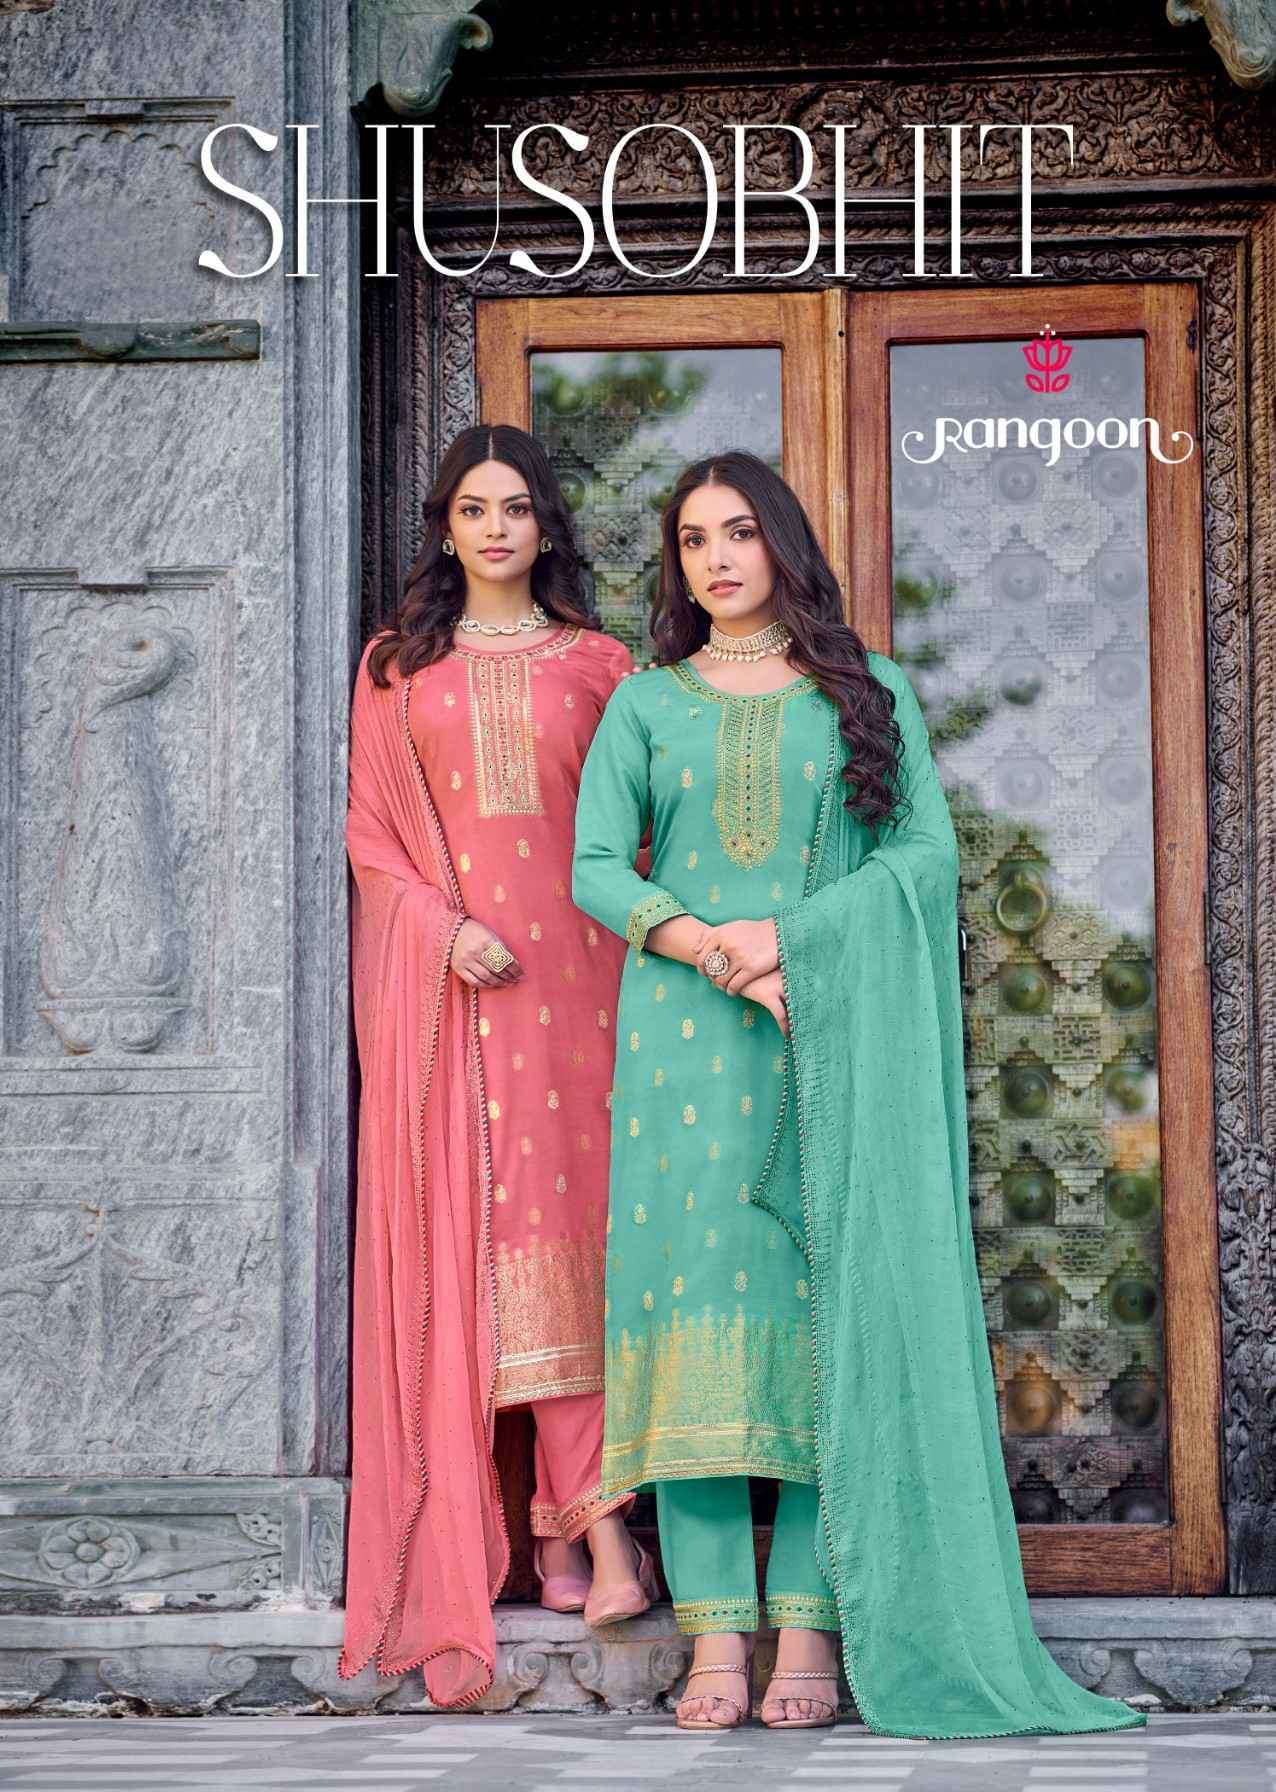 kessi fabrics Rangoon Shusobhit Designer jacquard silk readymade suits colleciton at best wholesale rate